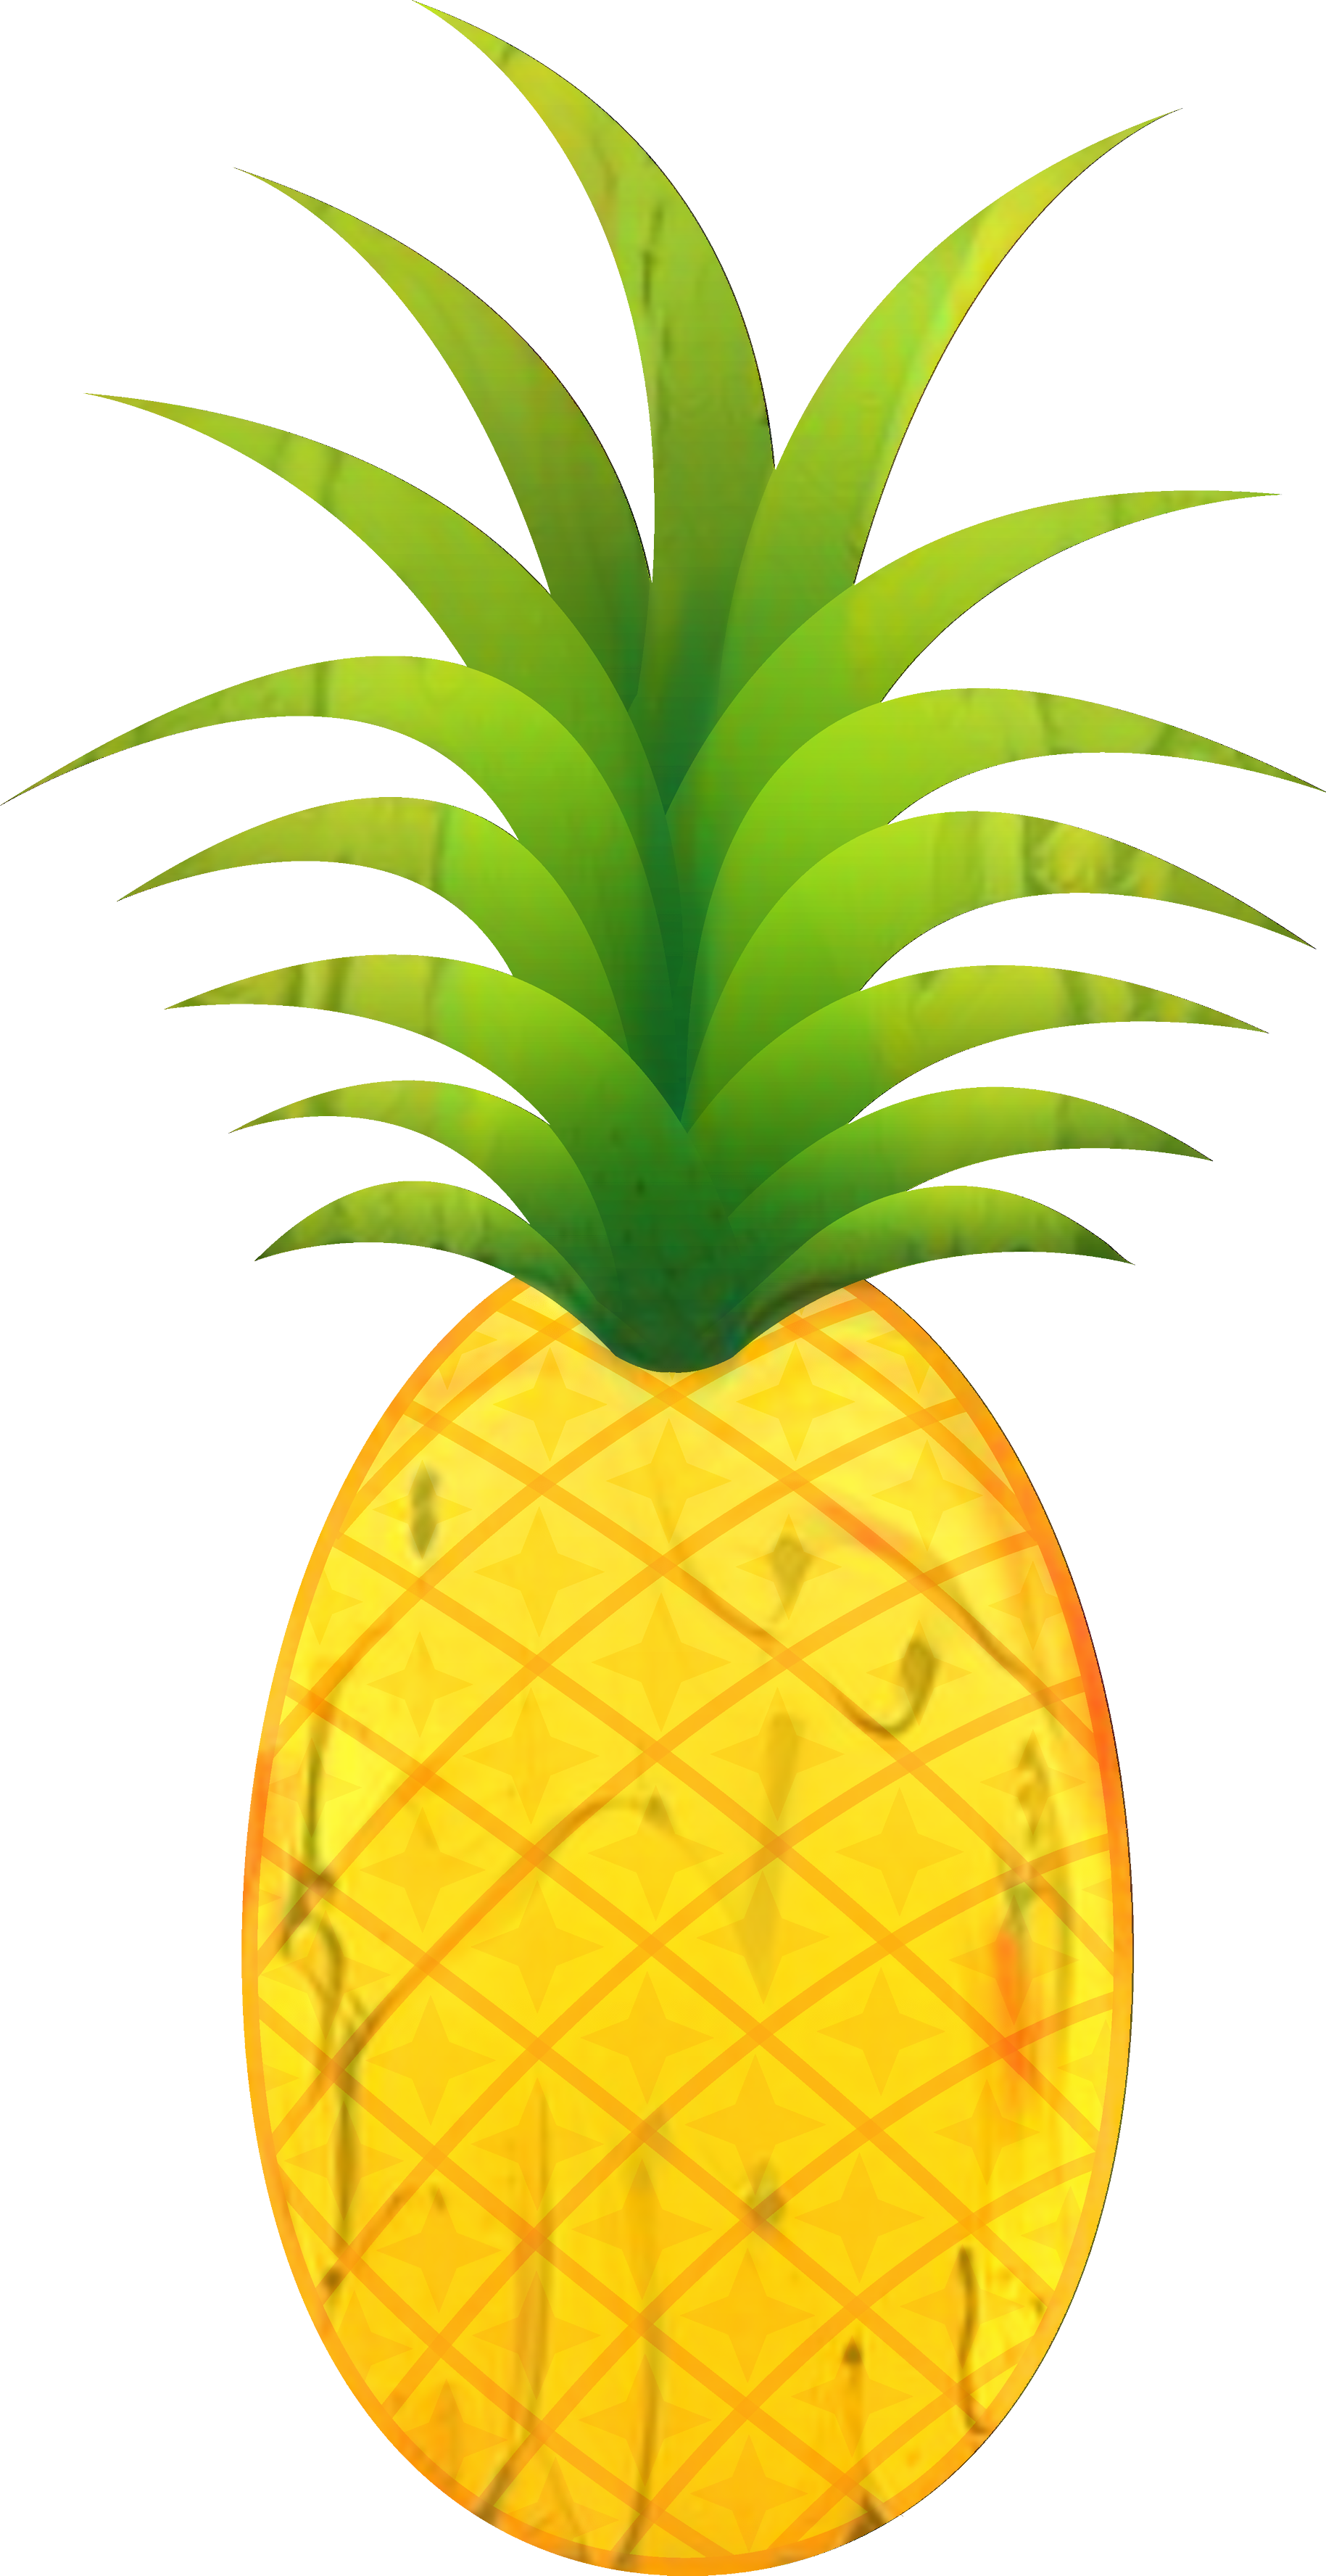 Pineapple Clip art Portable Network Graphics Image